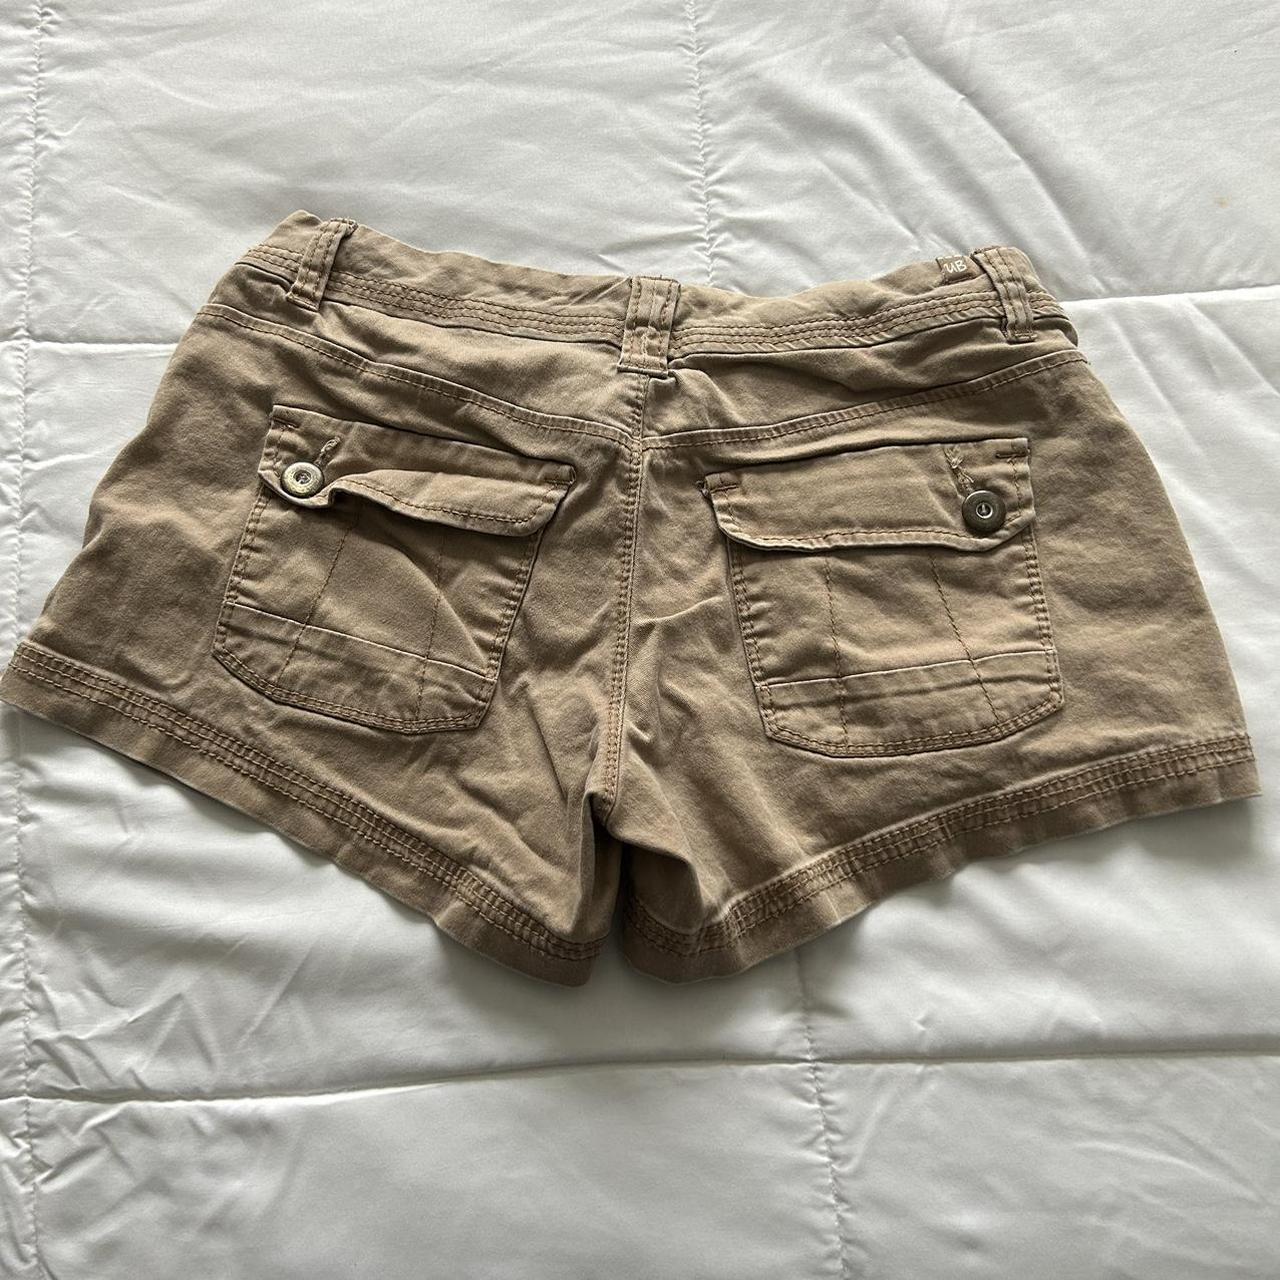 union bay tan short shorts marked size 9, waist: 16... - Depop